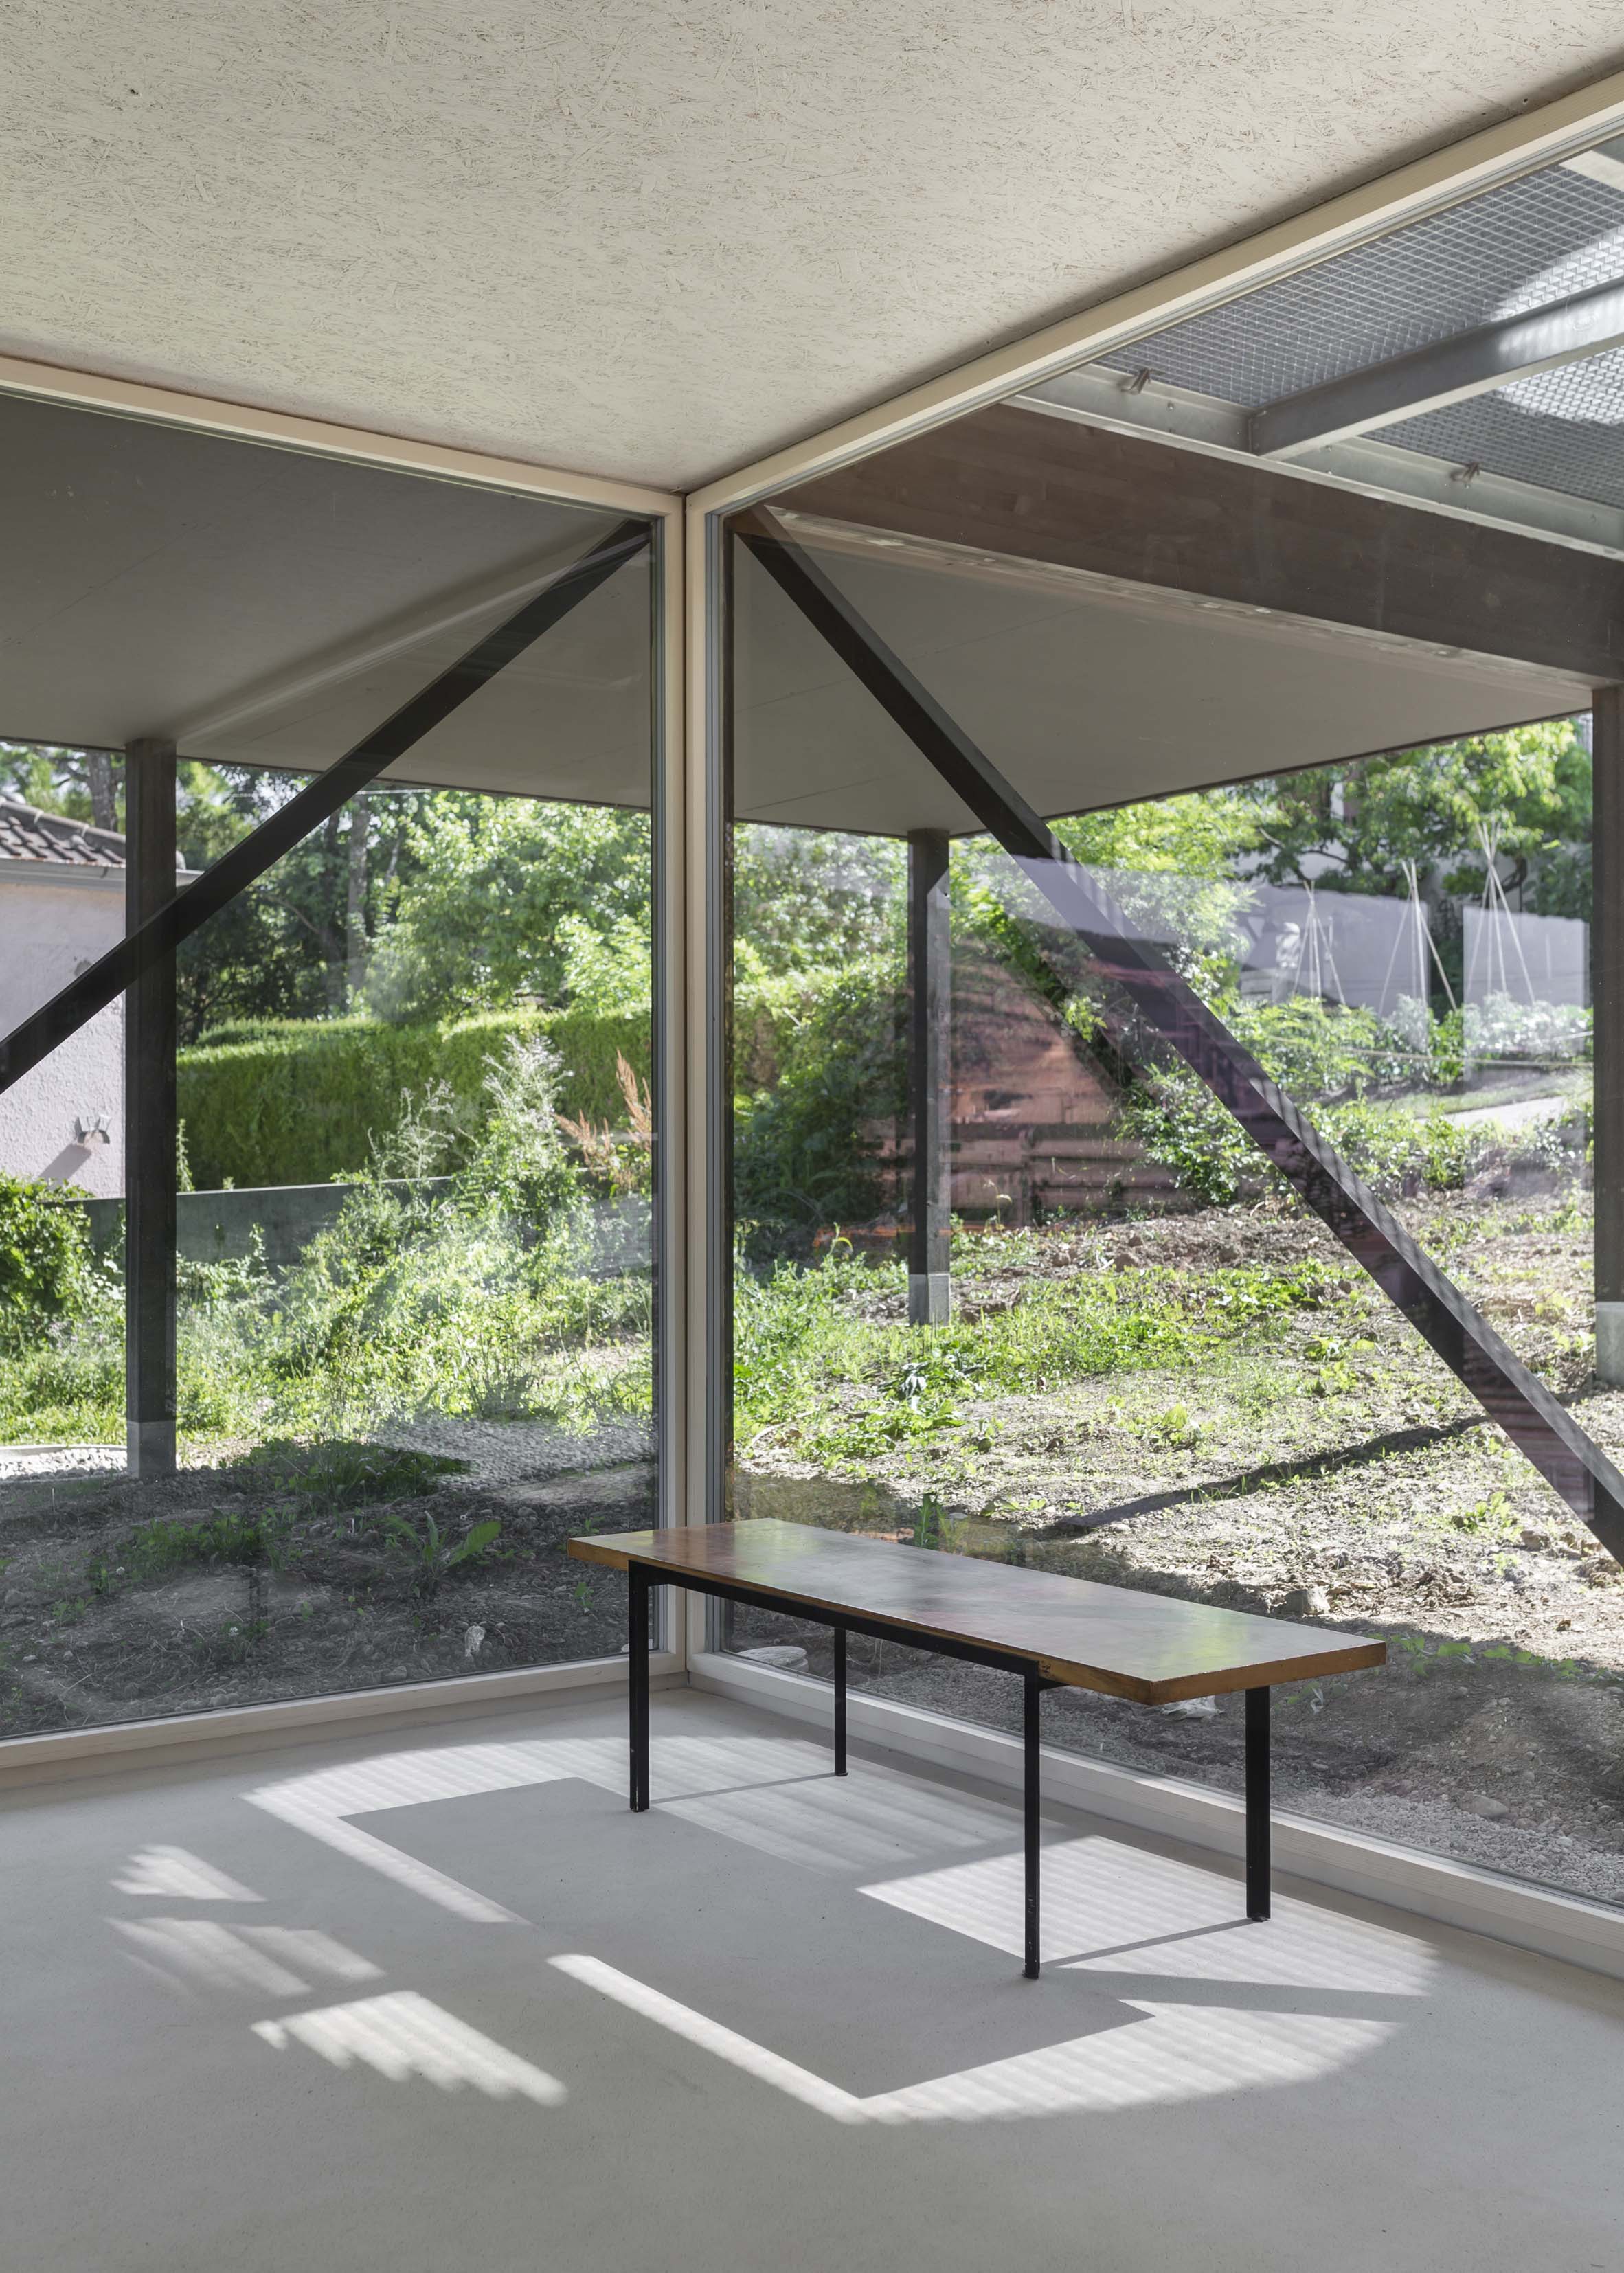 Casa CCFF by Leopold Banchini Architects in Lancy, Switzerland